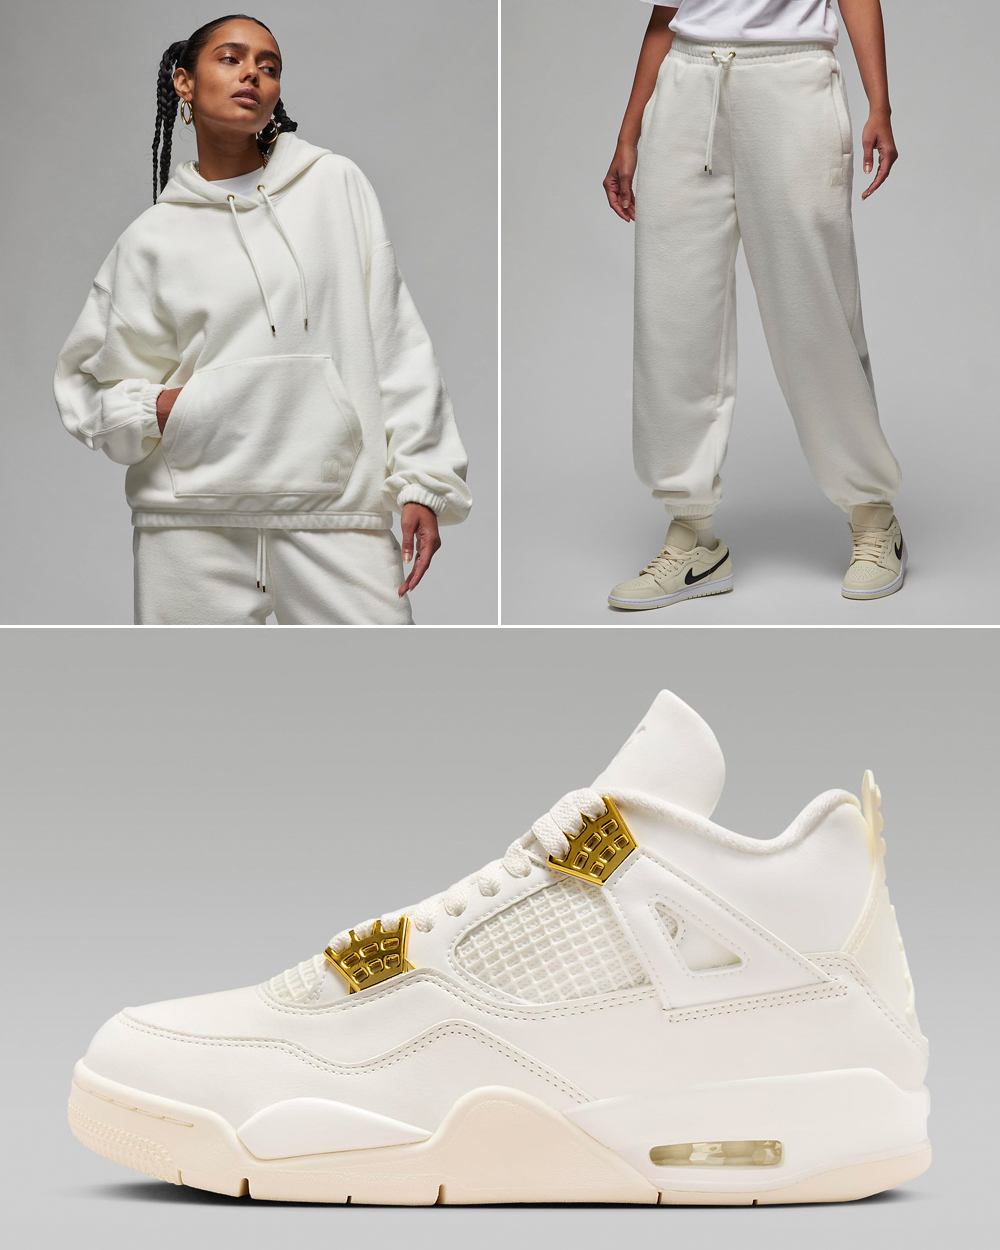 Air-Jordan-4-Womens-Sail-Gold-Hoodie-Pants-Matching-Outfit